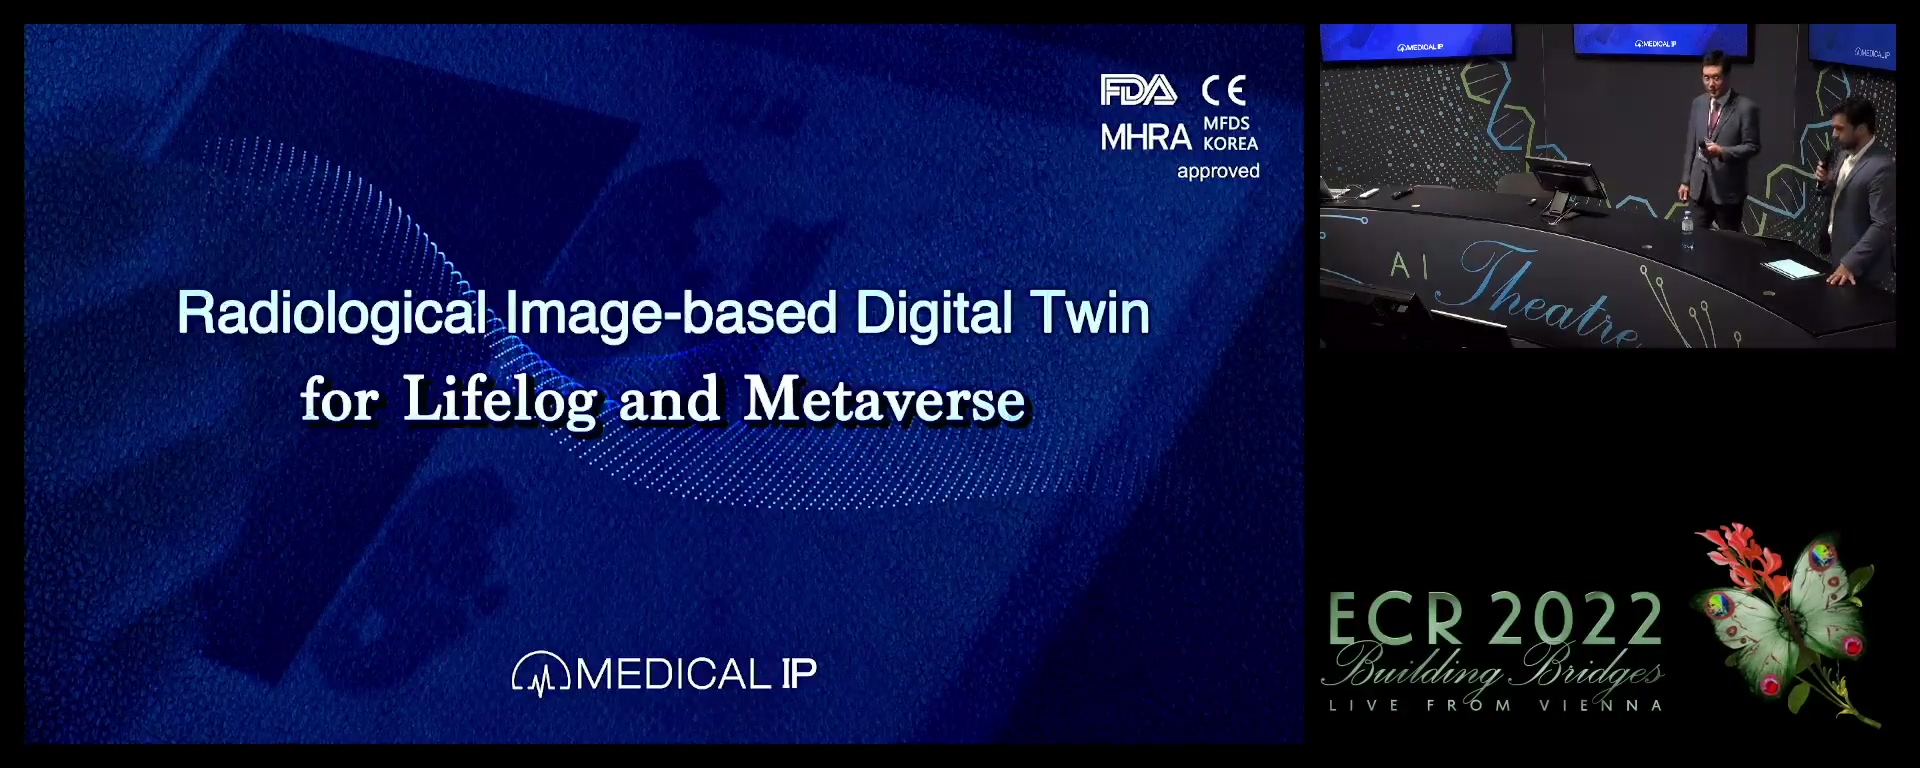 Radiological Image-based Digital Twin for Lifelog and Metaverse